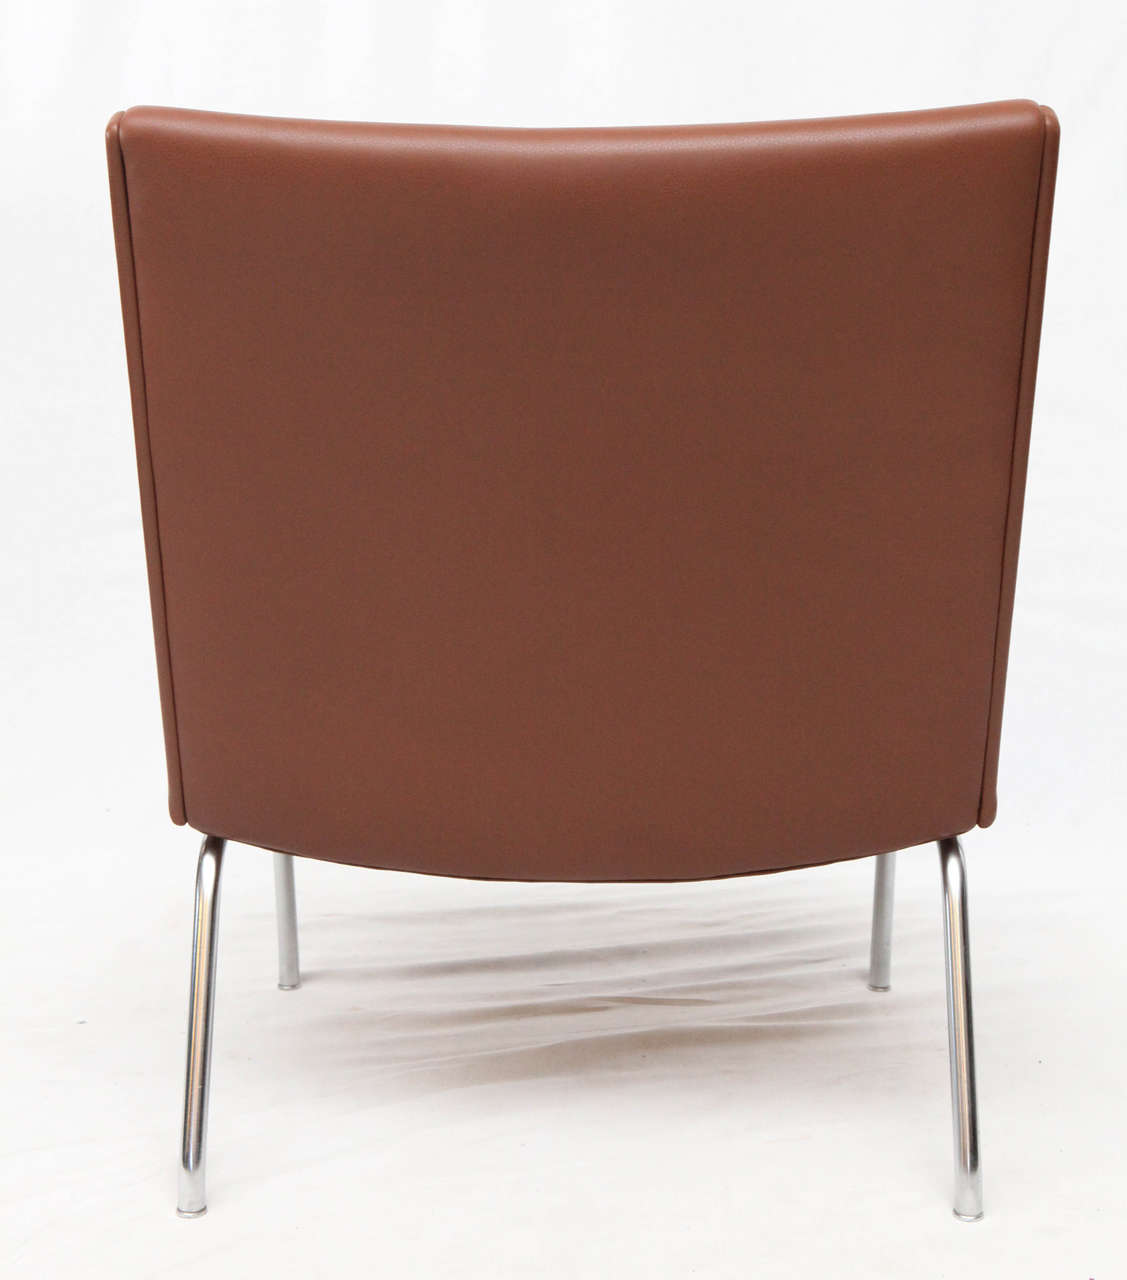 Hans Wegner AP 39 Lounge Chairs 1